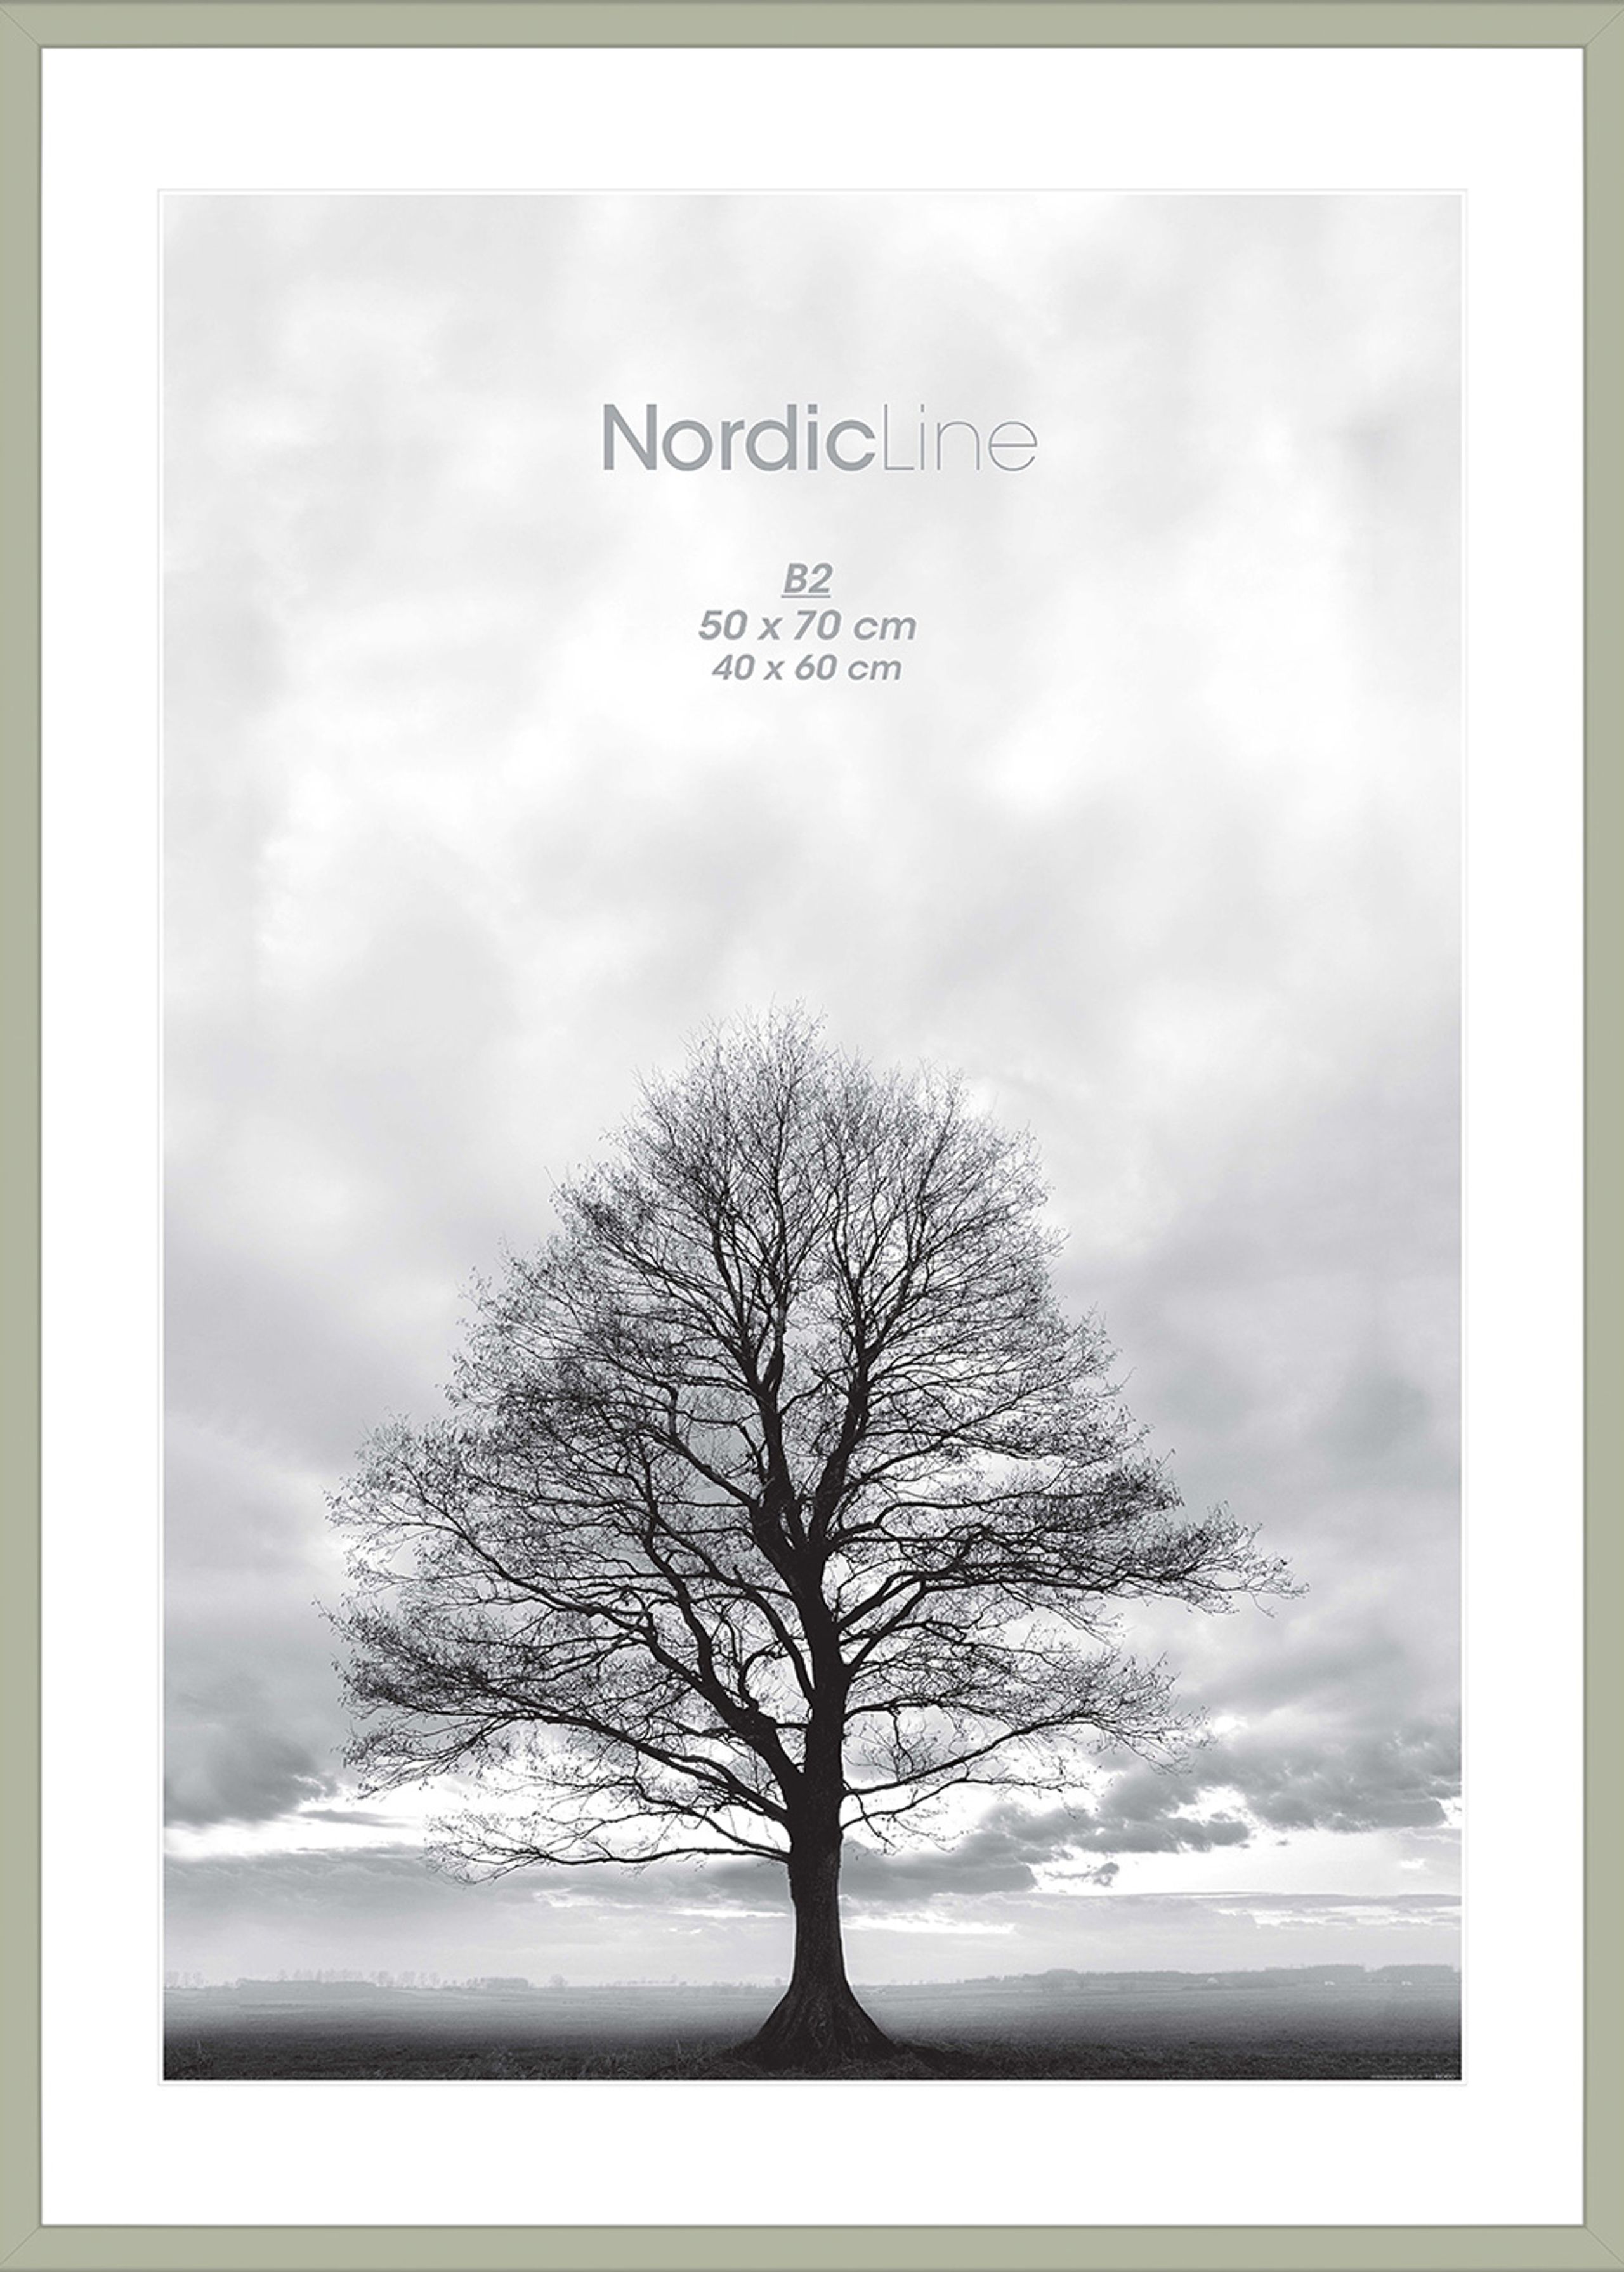 Nordic Line - Frames - Nordic Line frames - Peppermint - Peppermint